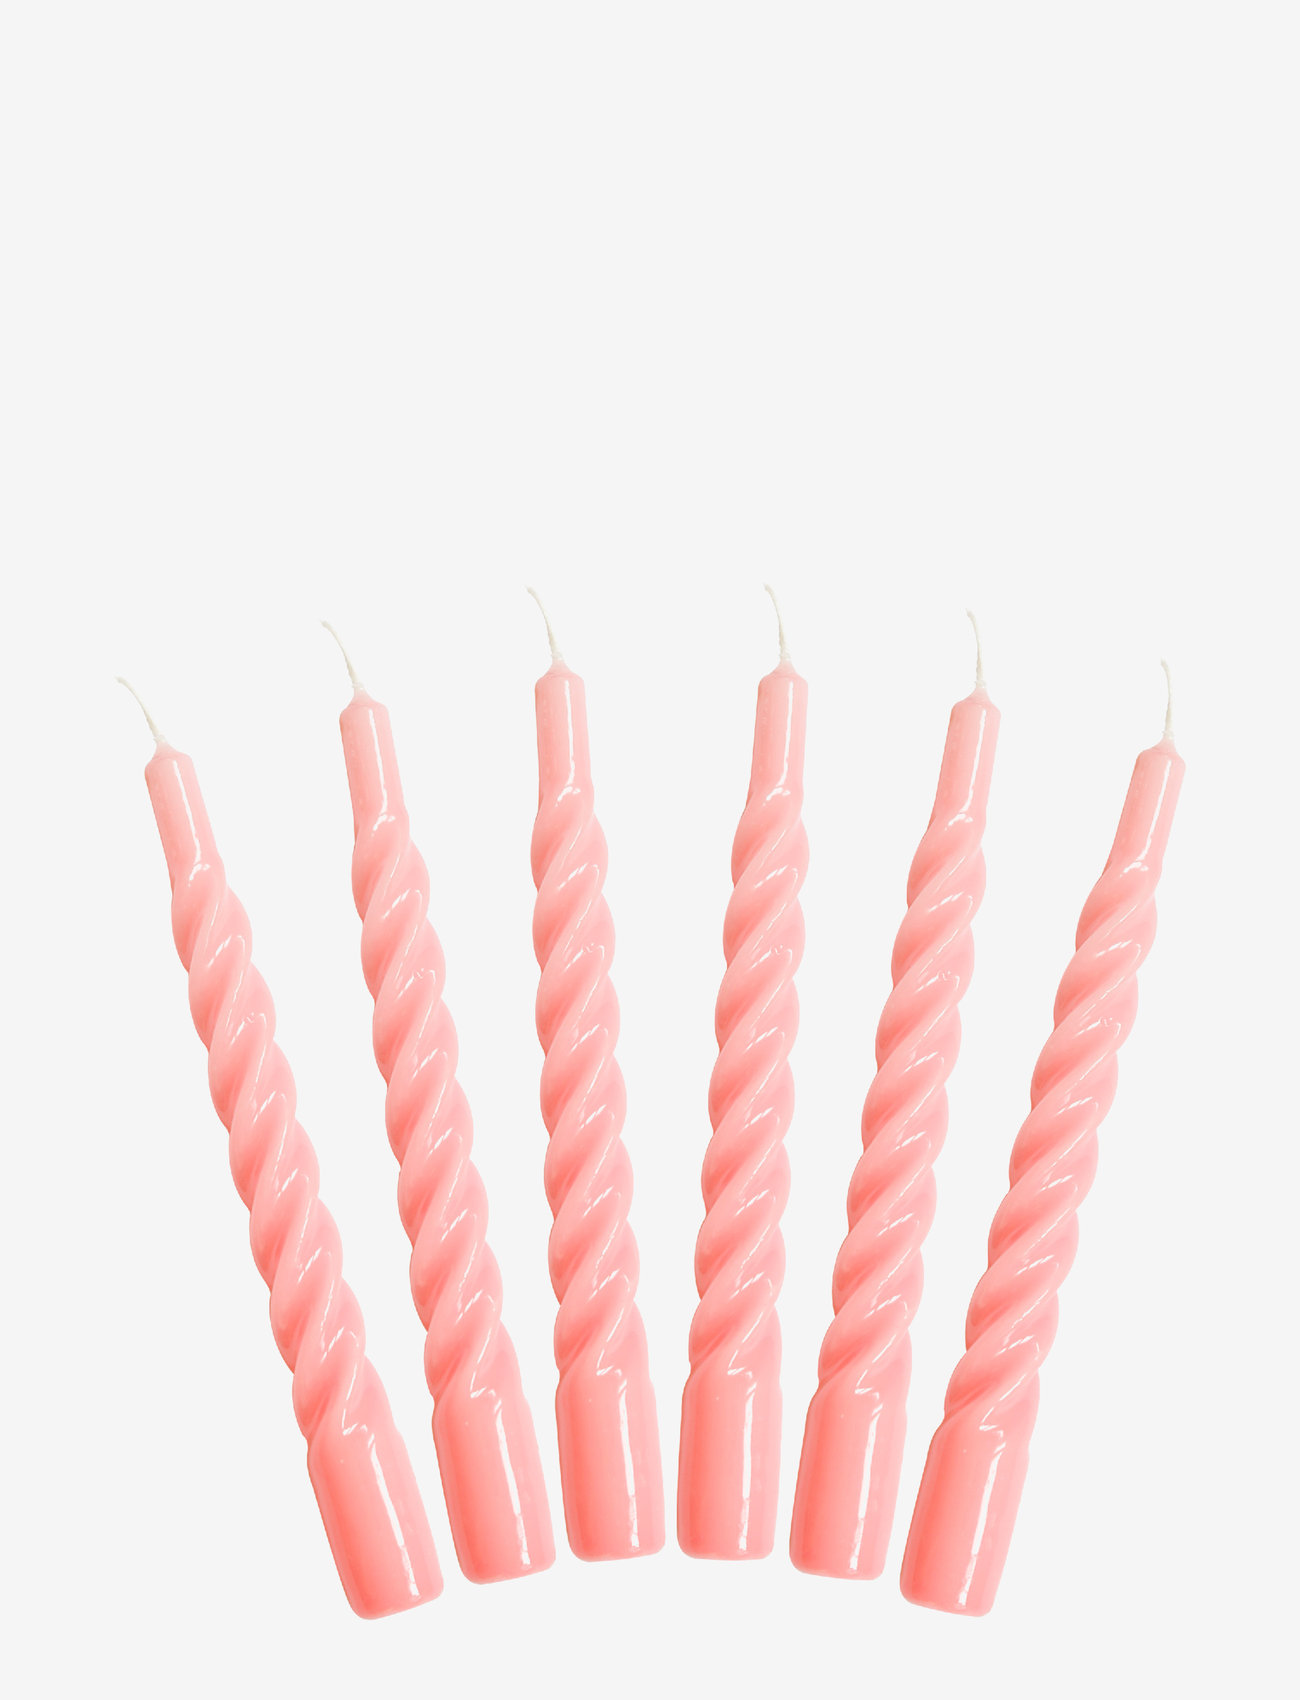 Kunstindustrien - Twisted Candles, 6 piece box - de laveste prisene - pink - 0